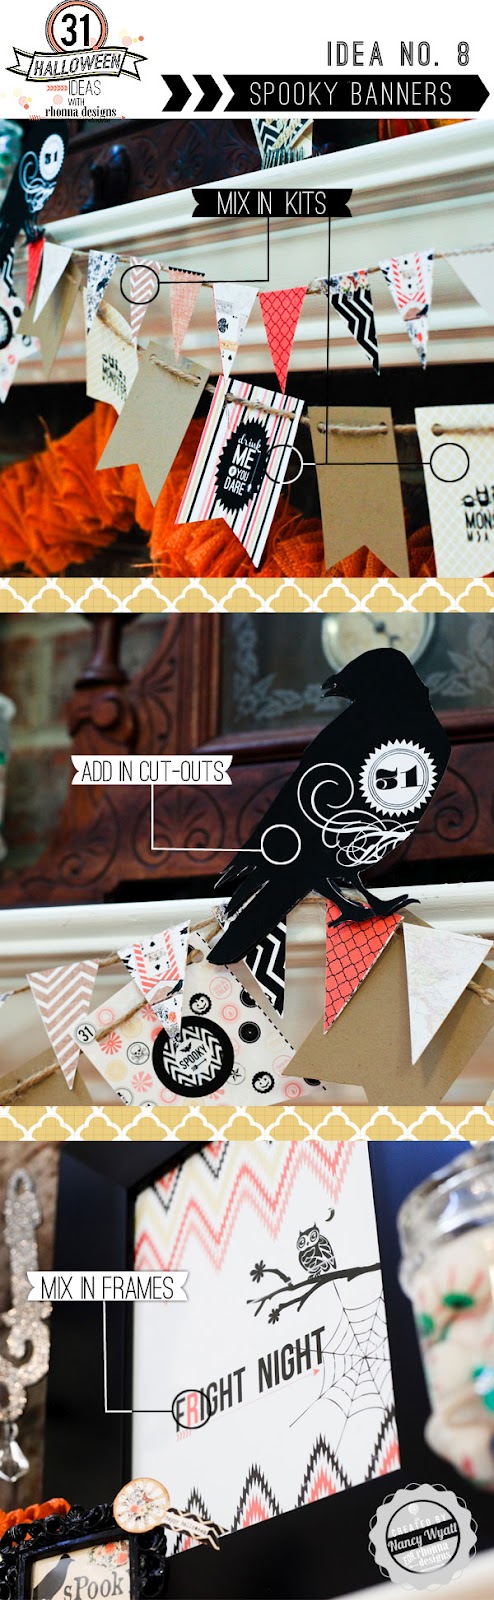 heart designs with banner  : Idea No. 8: 31 Halloween Ideas w/ Rhonna Designs - Spooky Banners